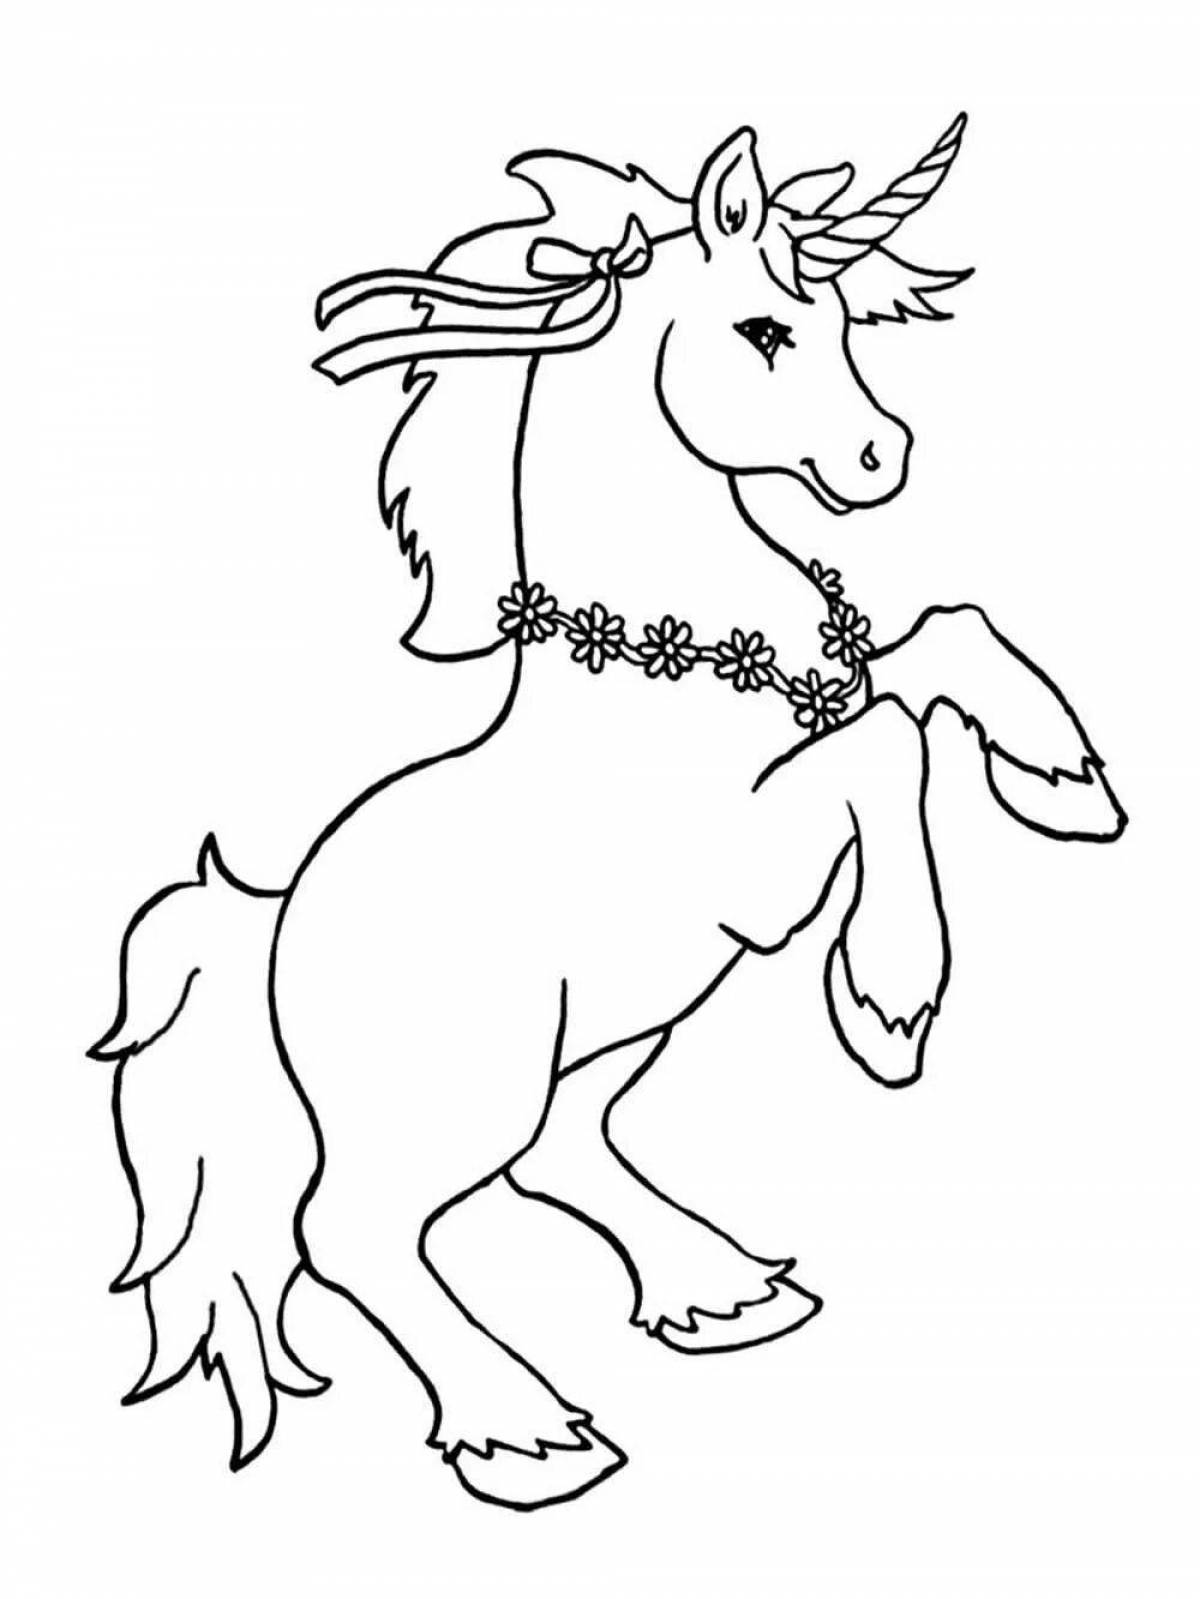 Joyful unicorn coloring book for kids